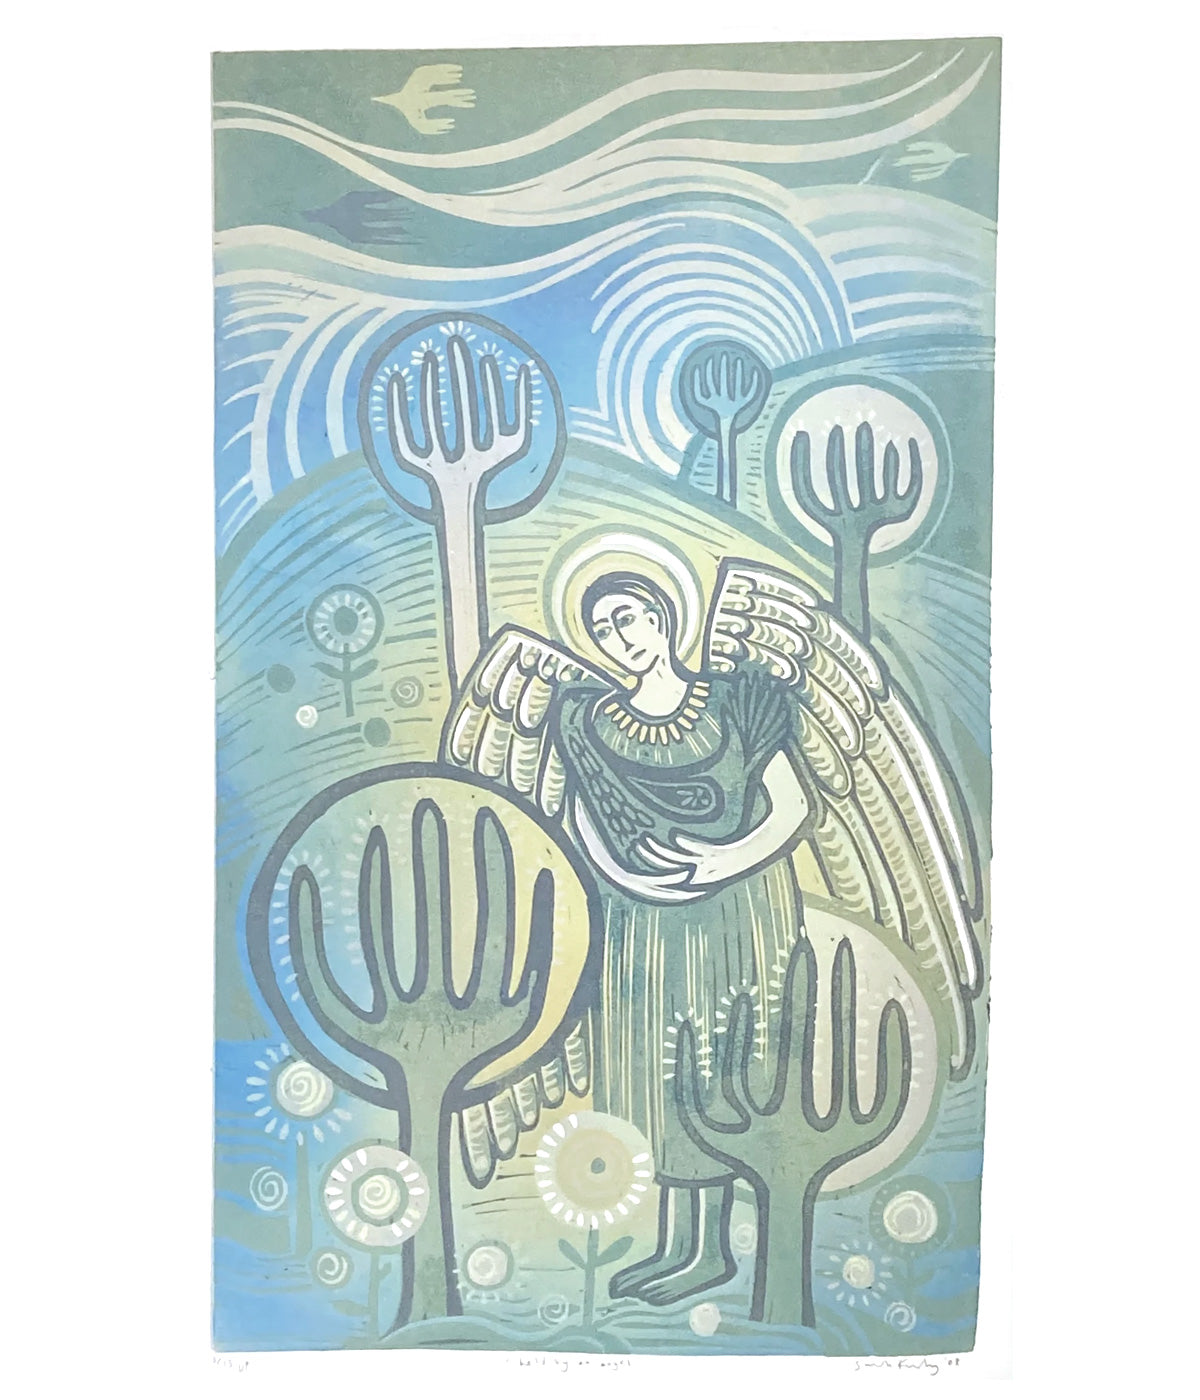 Held By An Angel, linocut print by Sarah Kirby